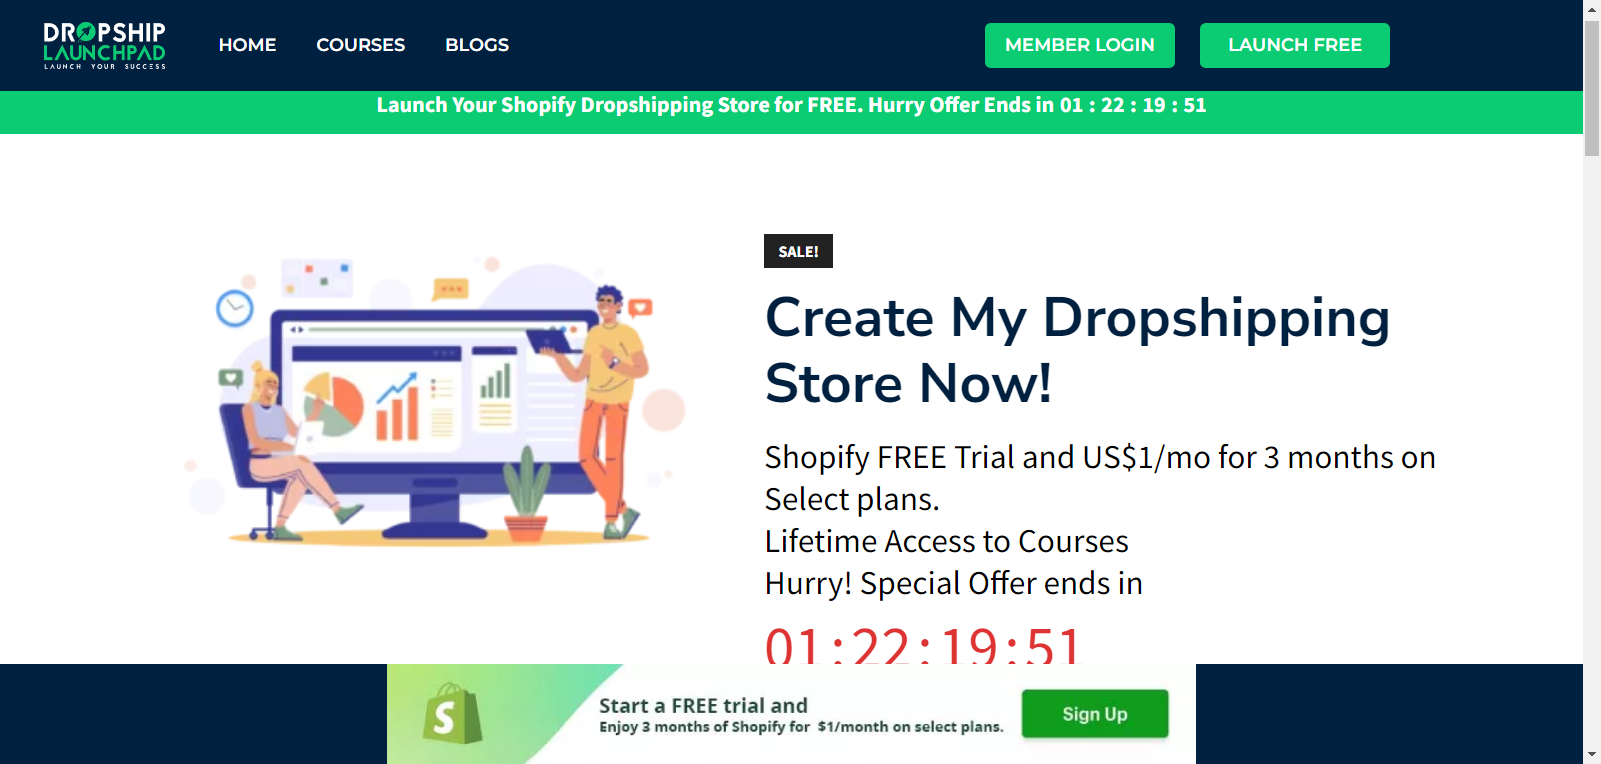 DropShip Launchpad: Free Turnkey Shopify Store